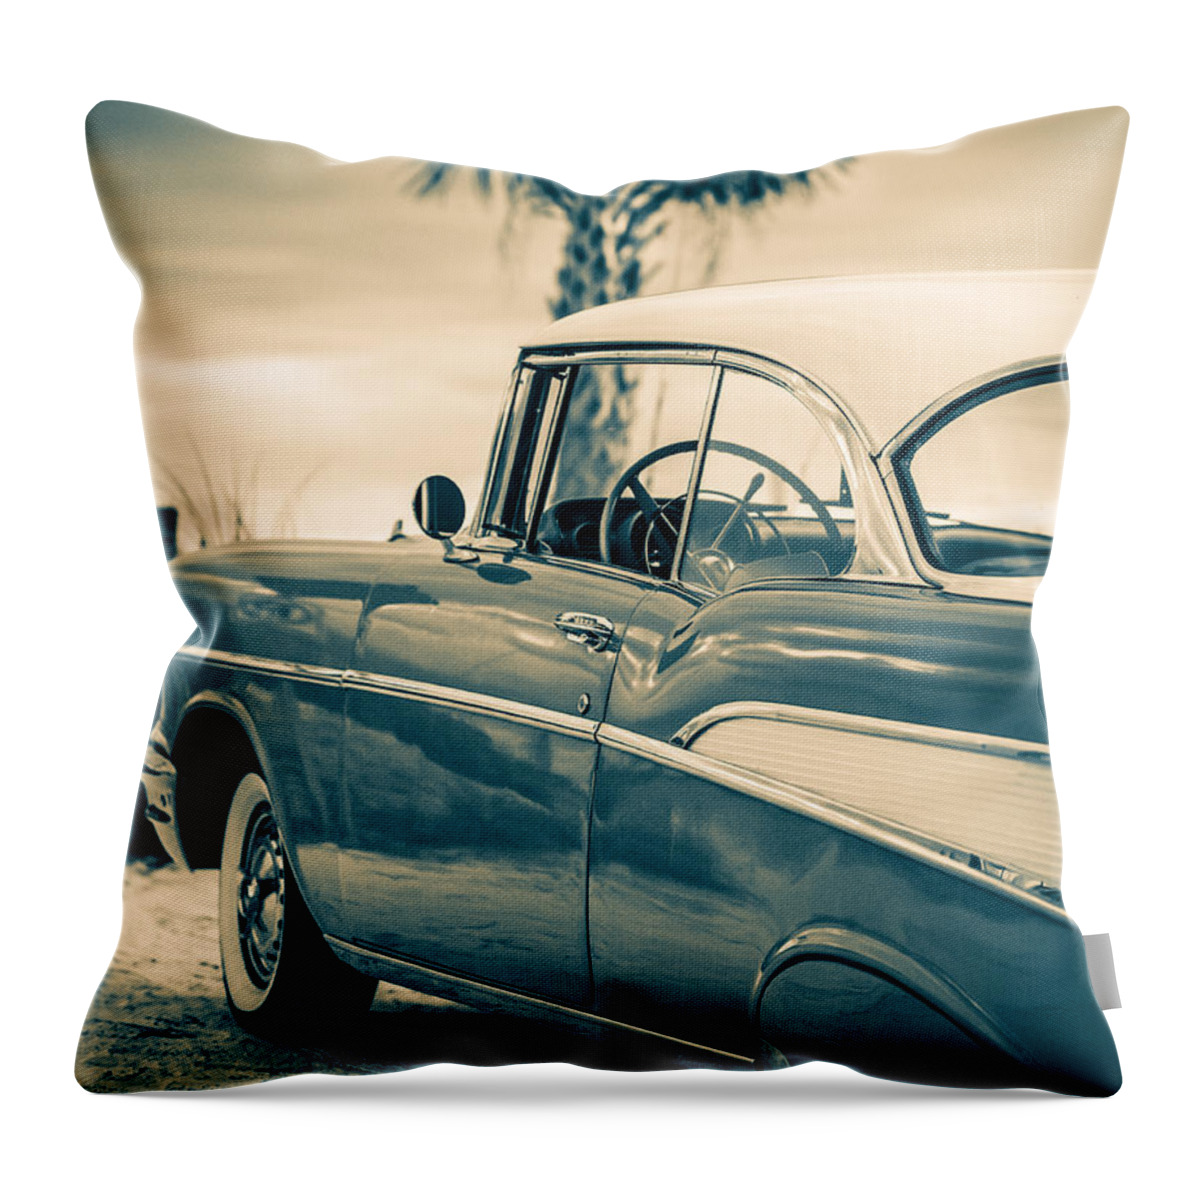 11x14 Throw Pillow featuring the photograph 1957 Chevy Bel Air Standard 11x14 by Edward Fielding